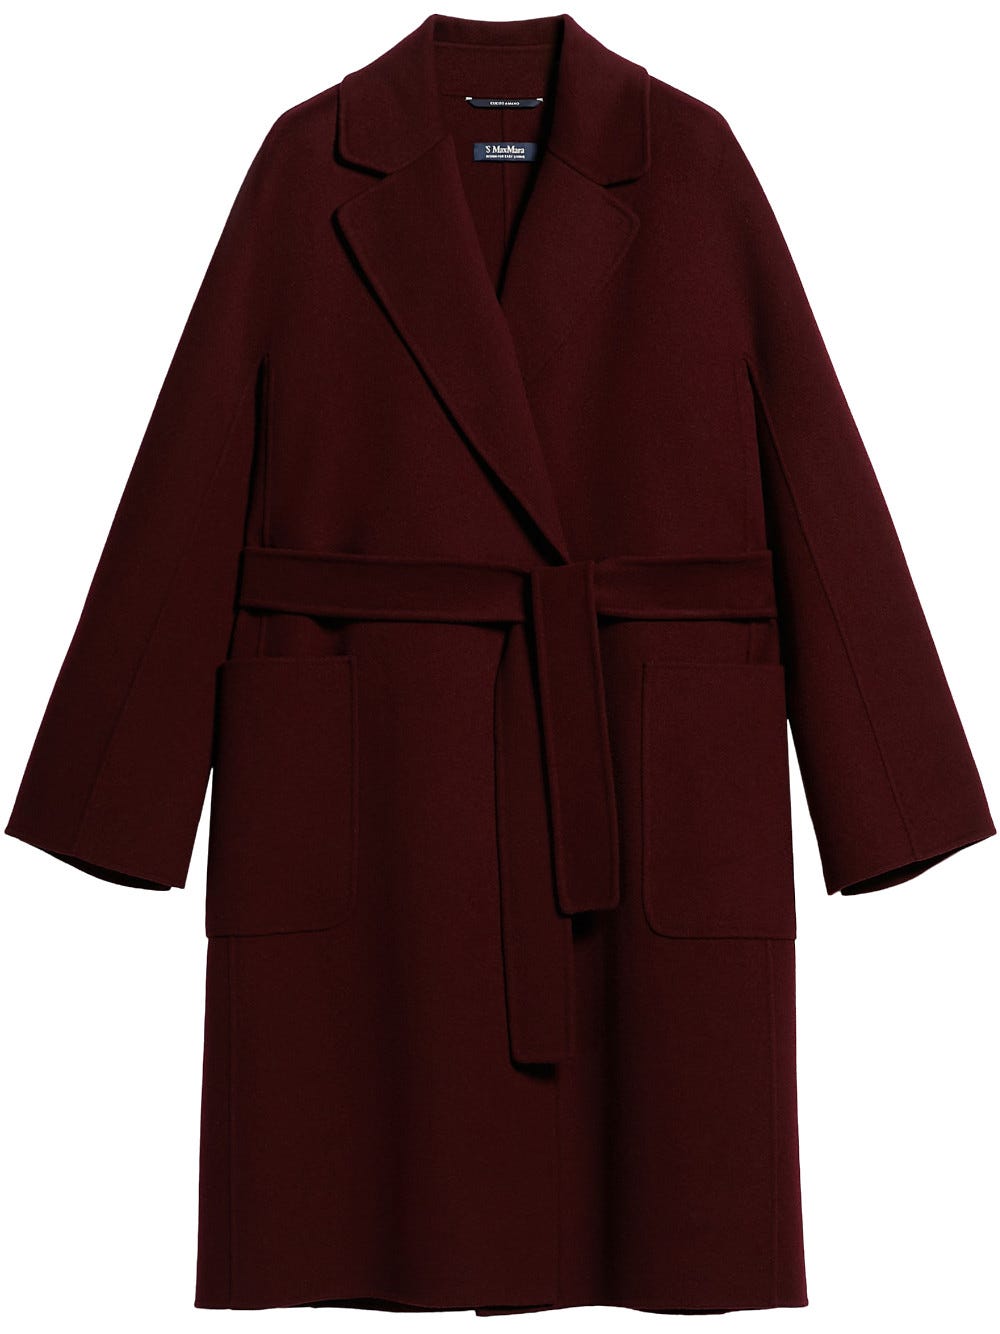 Women's MAX MARA Coats Sale, Up To 70% Off | ModeSens